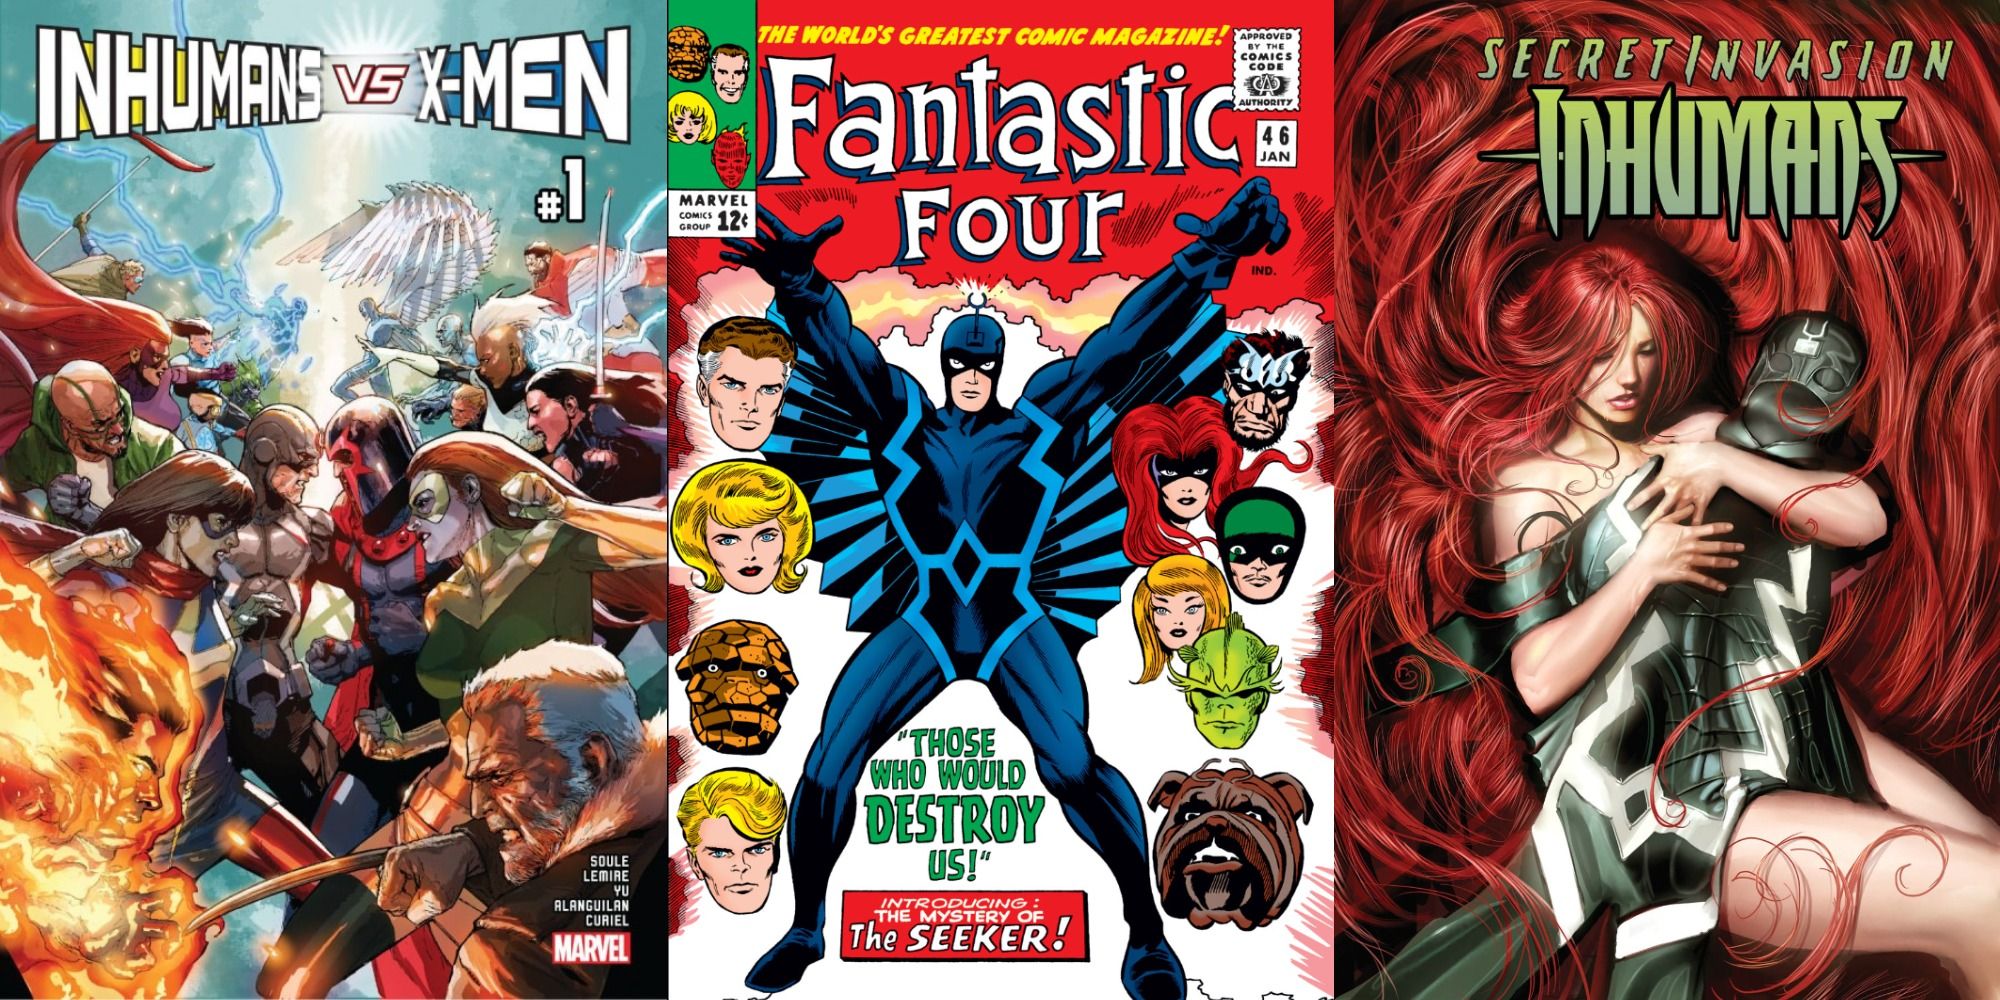 Split image of X-men Vs Inhumans 1, Fantastic Four 46, and Secret Invasion: Inhumans 1.